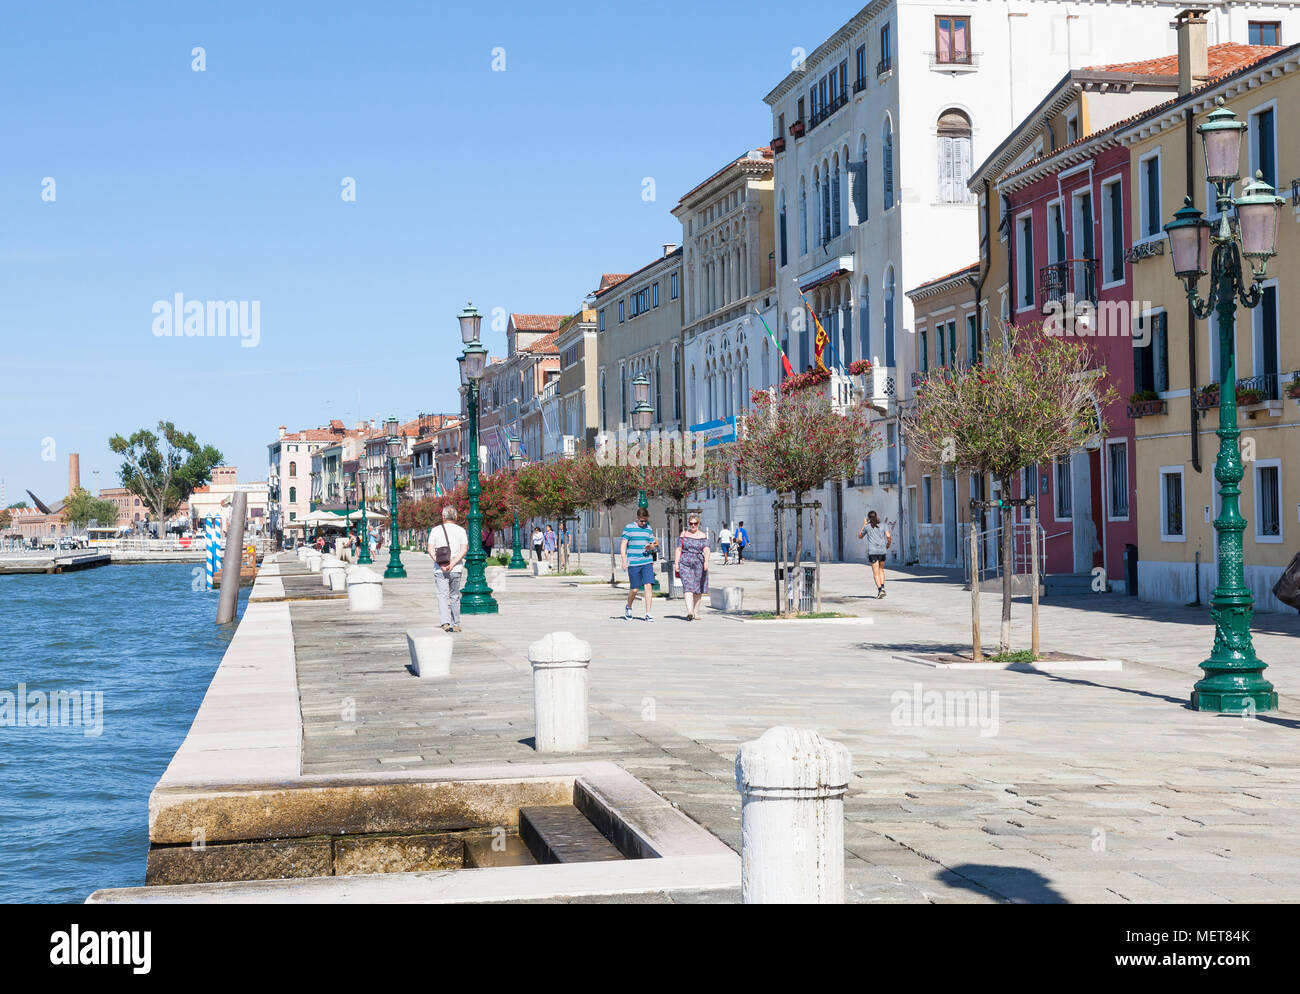 The Zattere, Dorsoduro, Venice, Veneto, Italy in summer  with people walking along the waterfront promenade Stock Photo